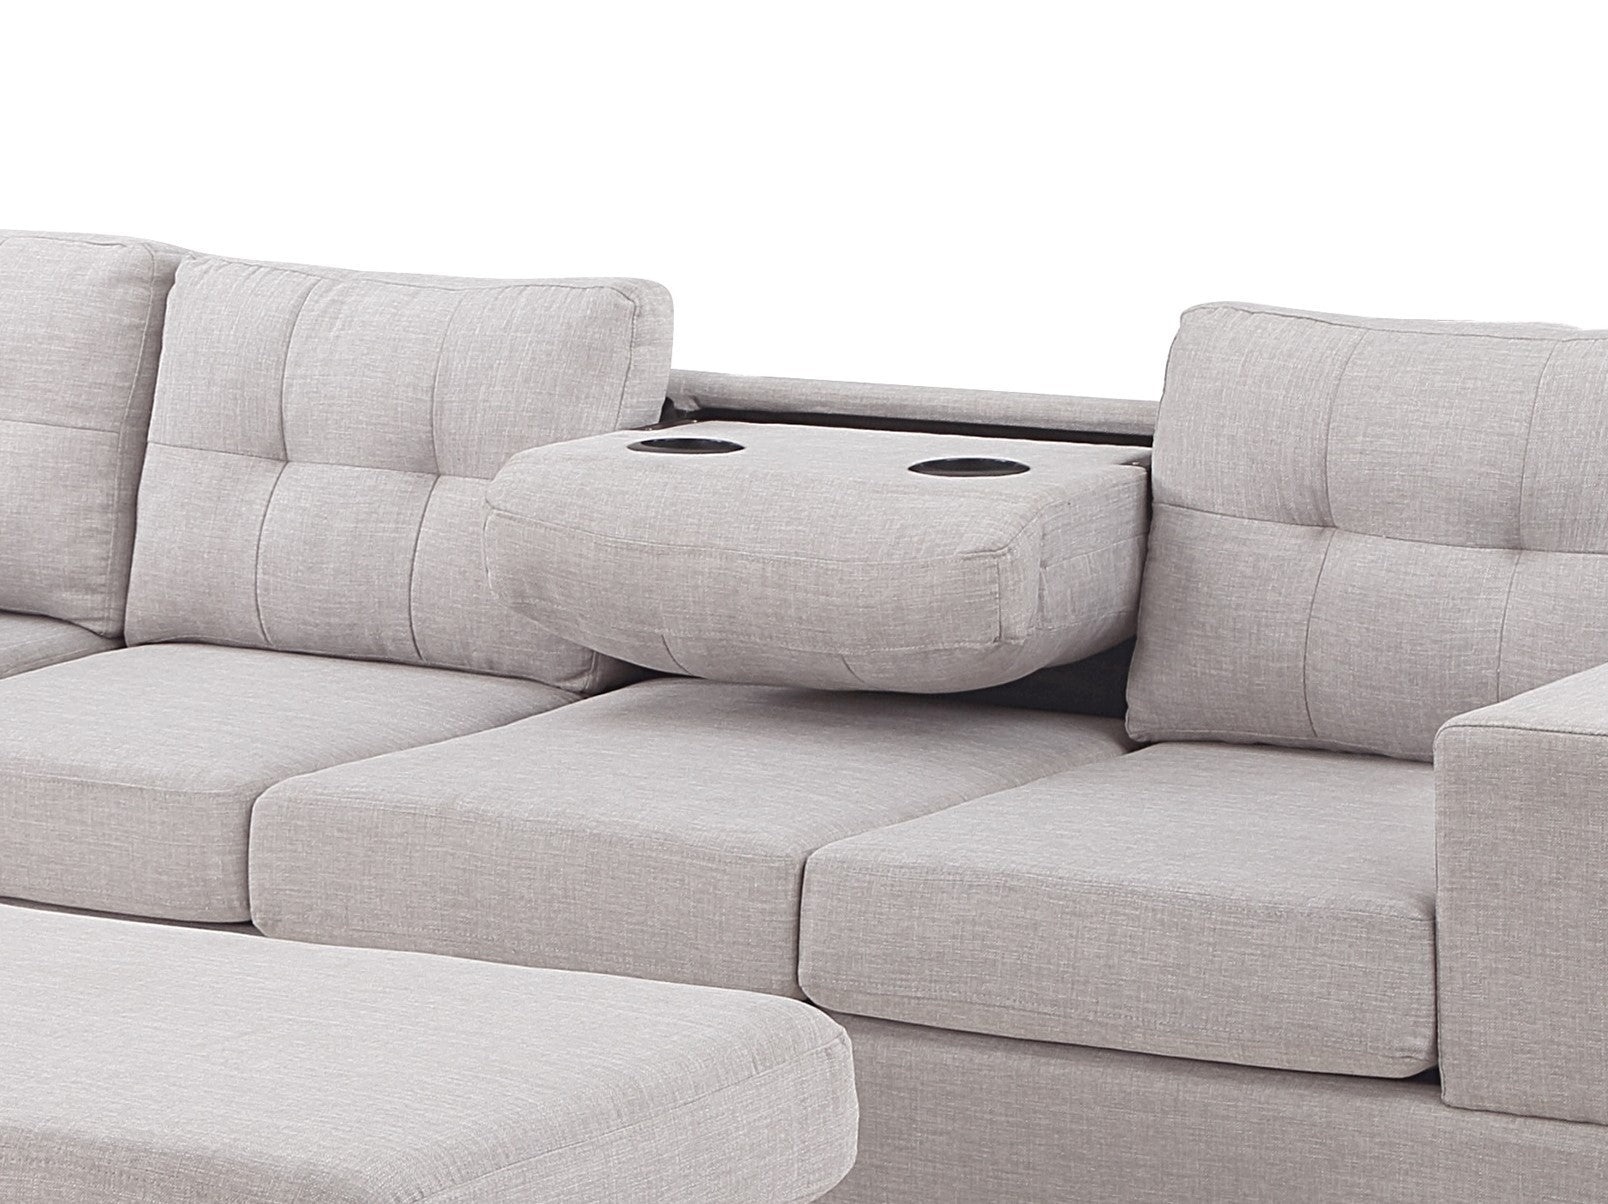 Hilo Light Gray Fabric Reversible Sectional Sofa w/Storage Ottoman